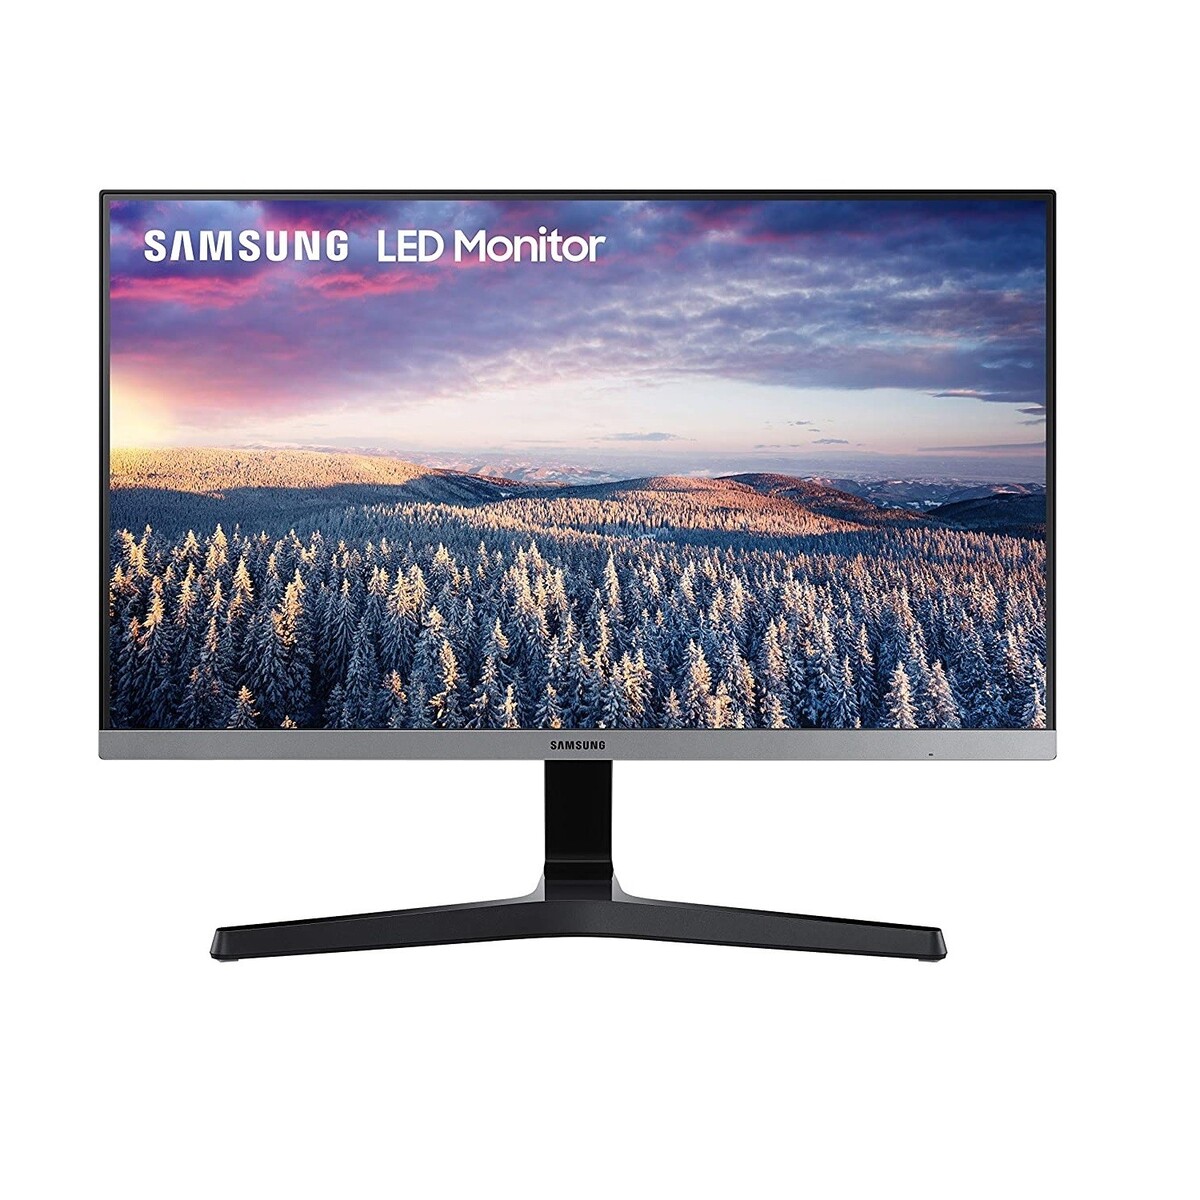 Samsung LED Monitor LS22R350FHWXXL 22"